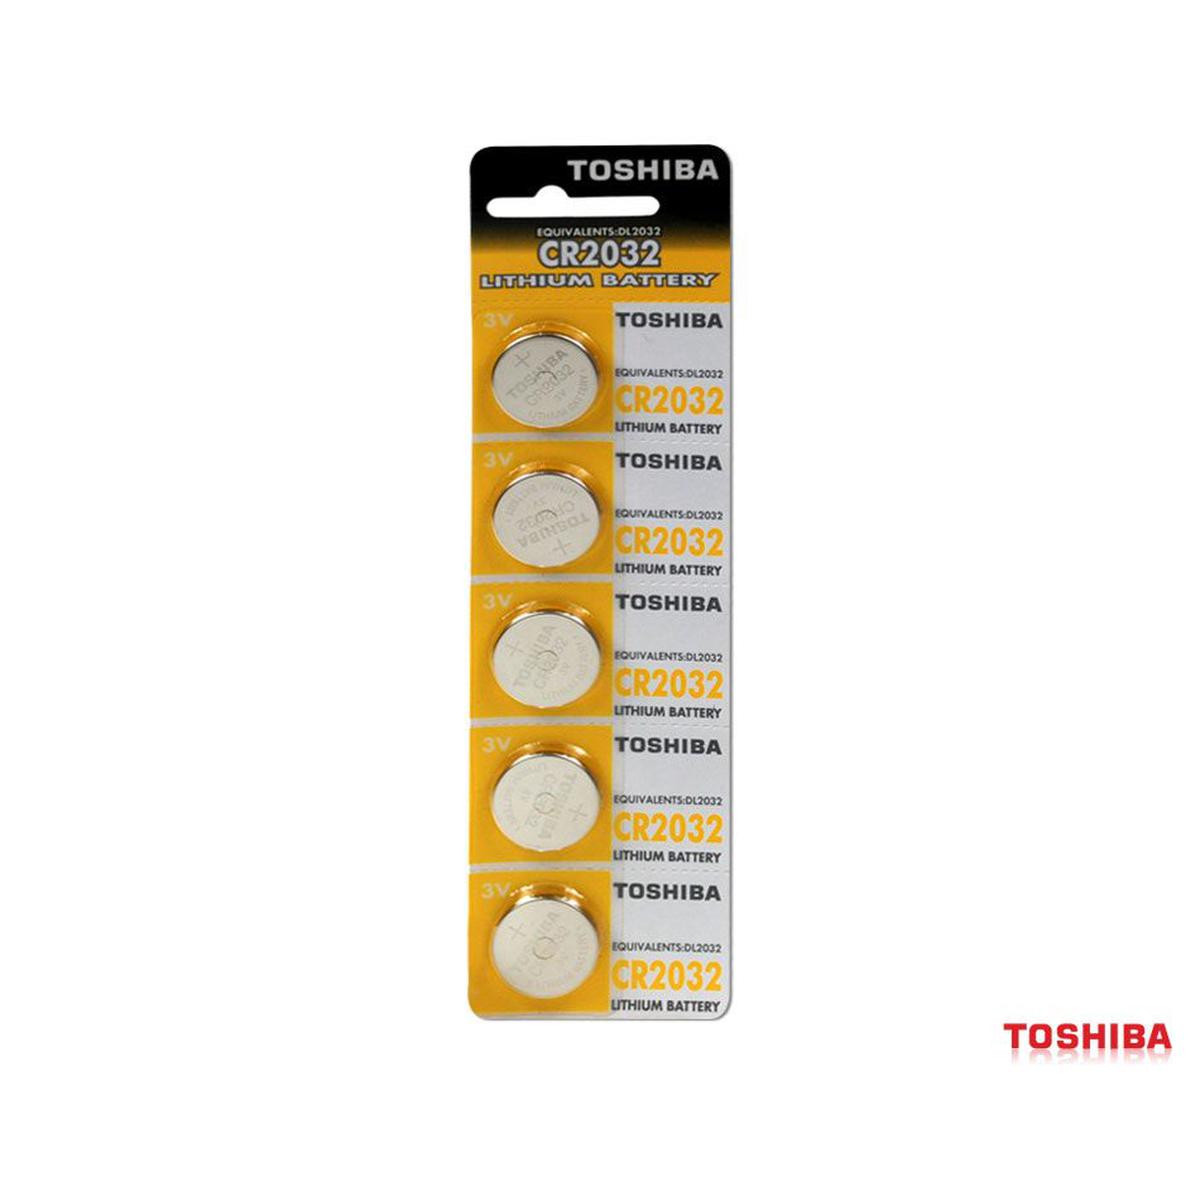 Toshiba CR2032 Lityum Düğme Pil 5'li resmi